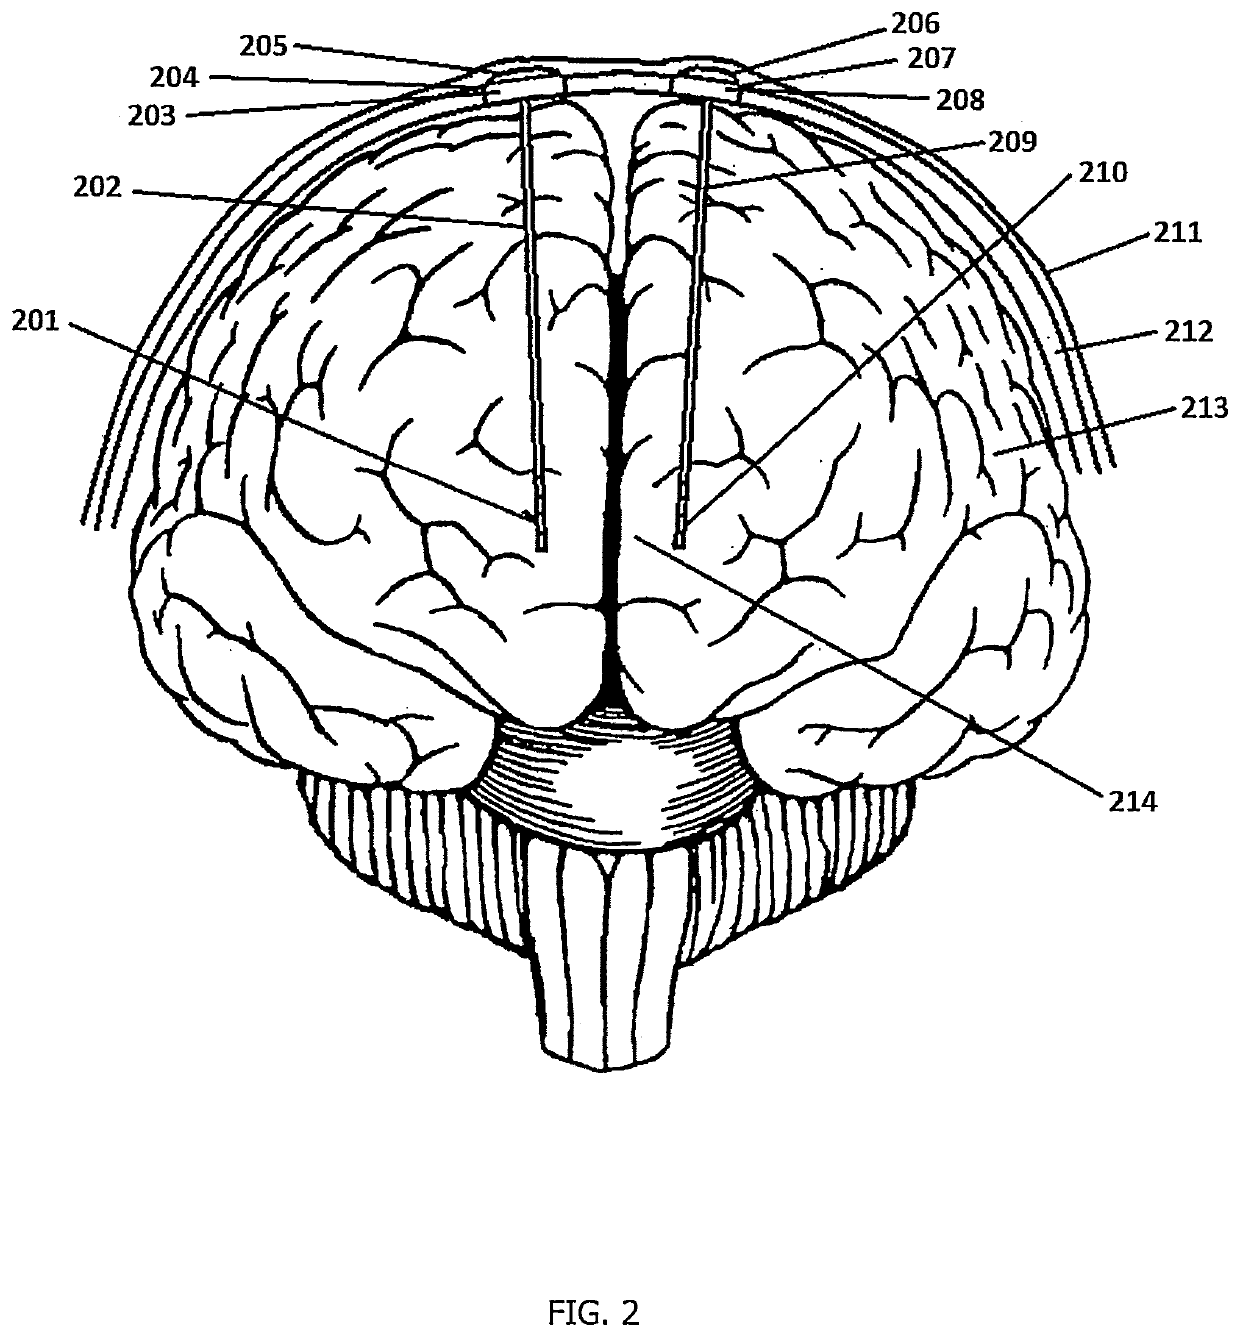 Transcranial current loop stimulation device